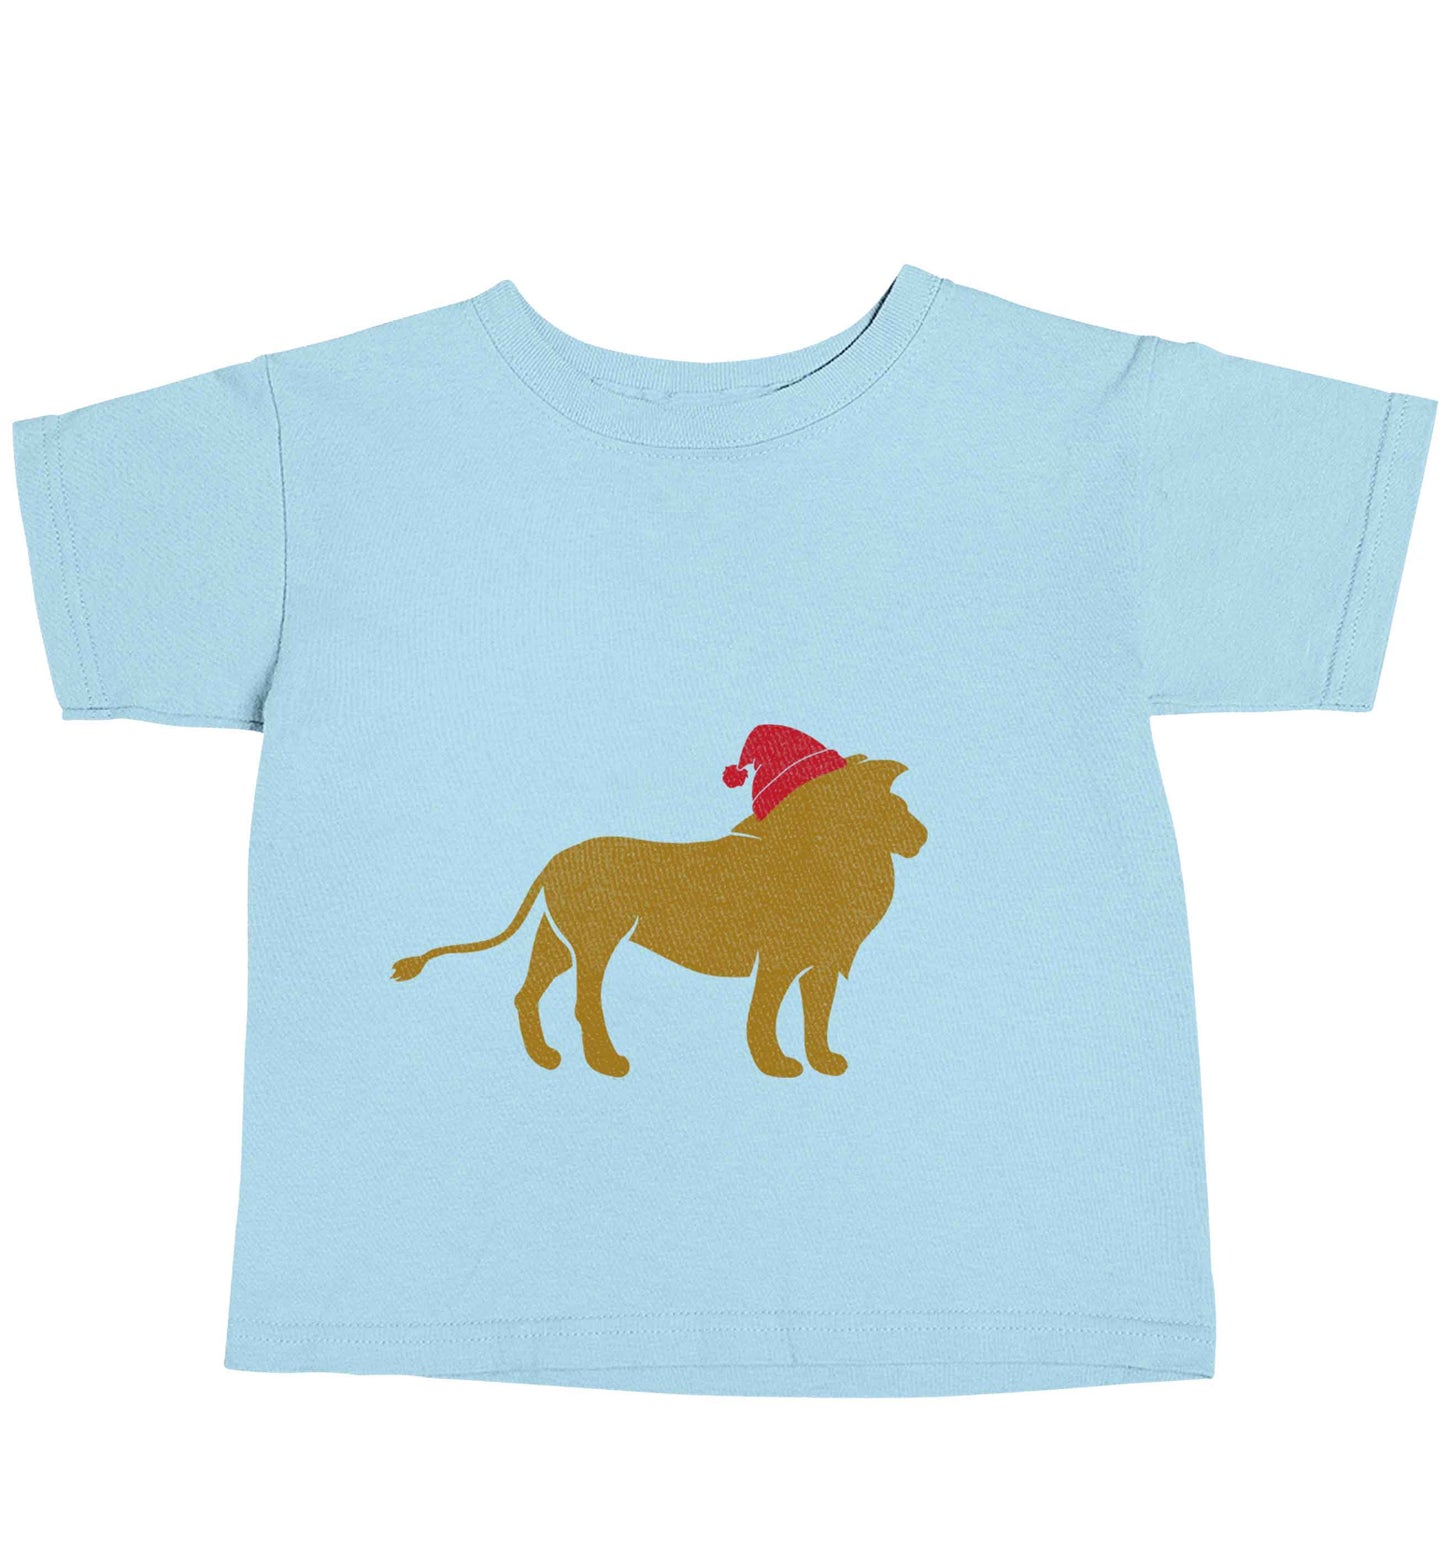 Gold lion santa light blue baby toddler Tshirt 2 Years